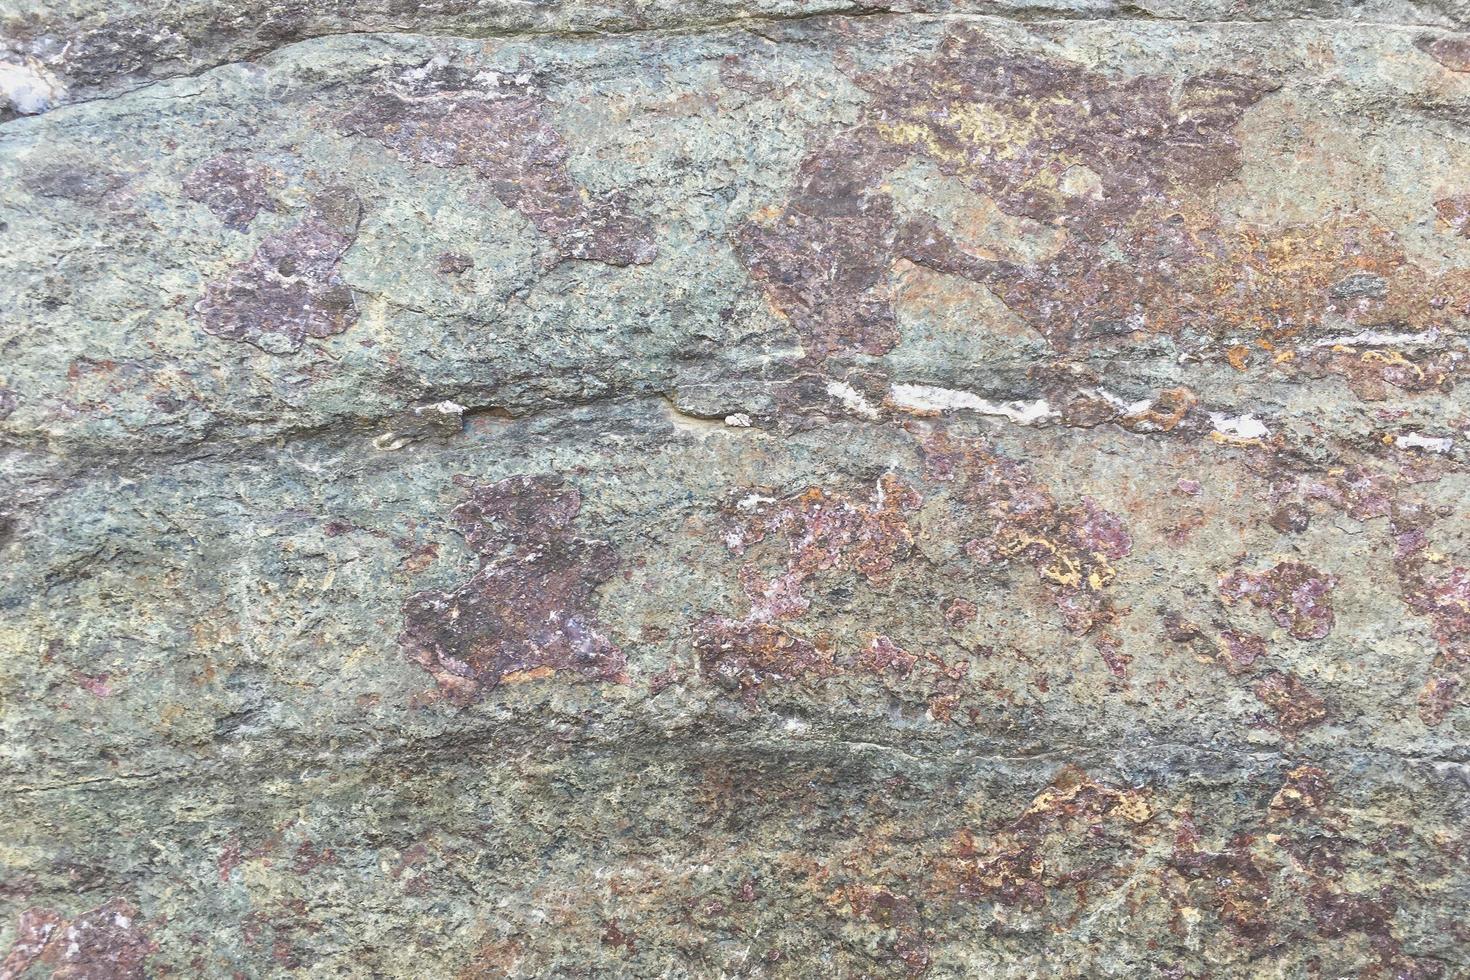 fundo de close up de textura de pedra de rocha foto